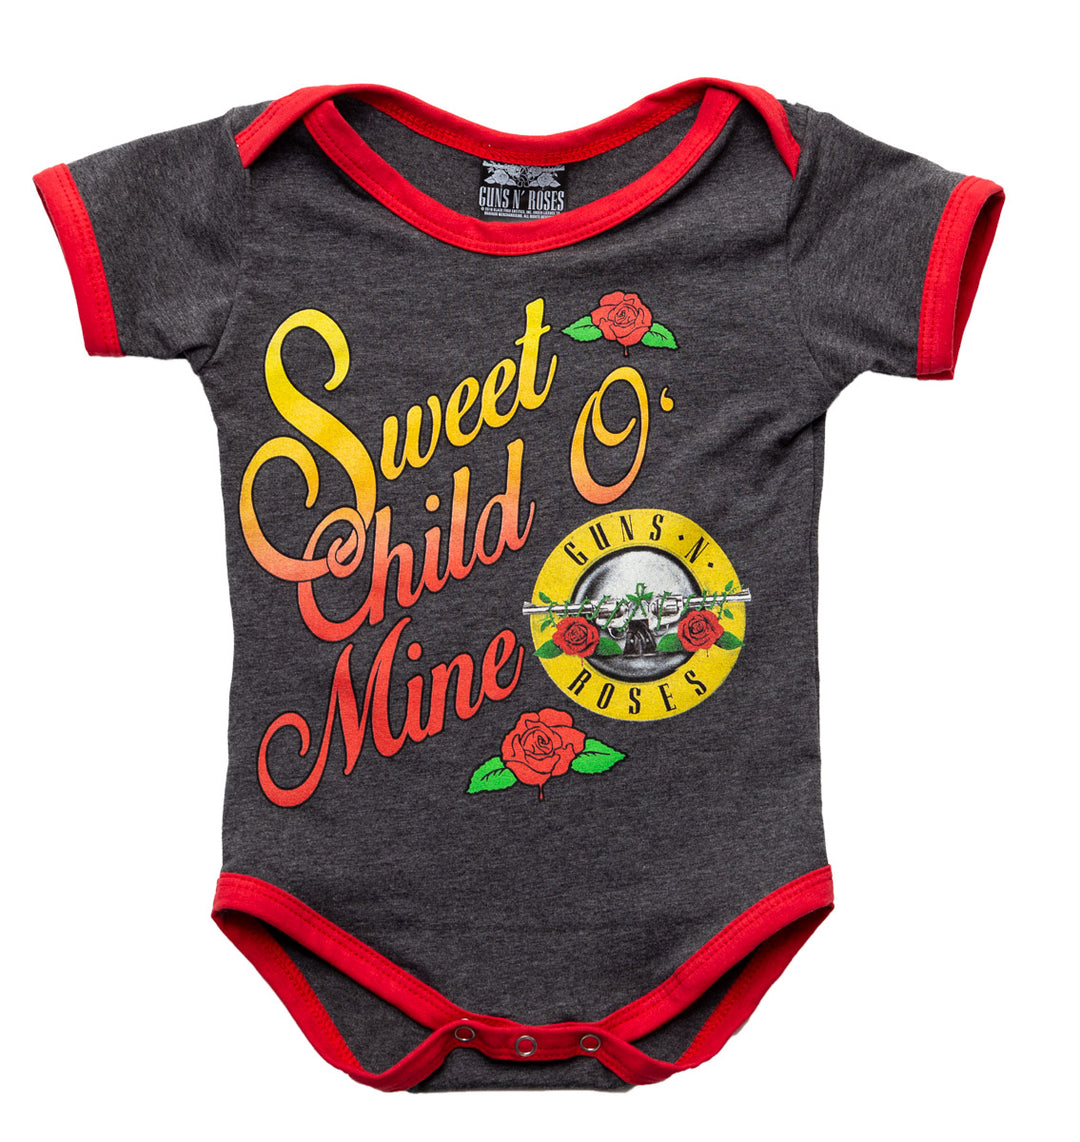 Guns N Roses Sweet Child O' Mine Baby Diaper Suit Romper- Charcoal